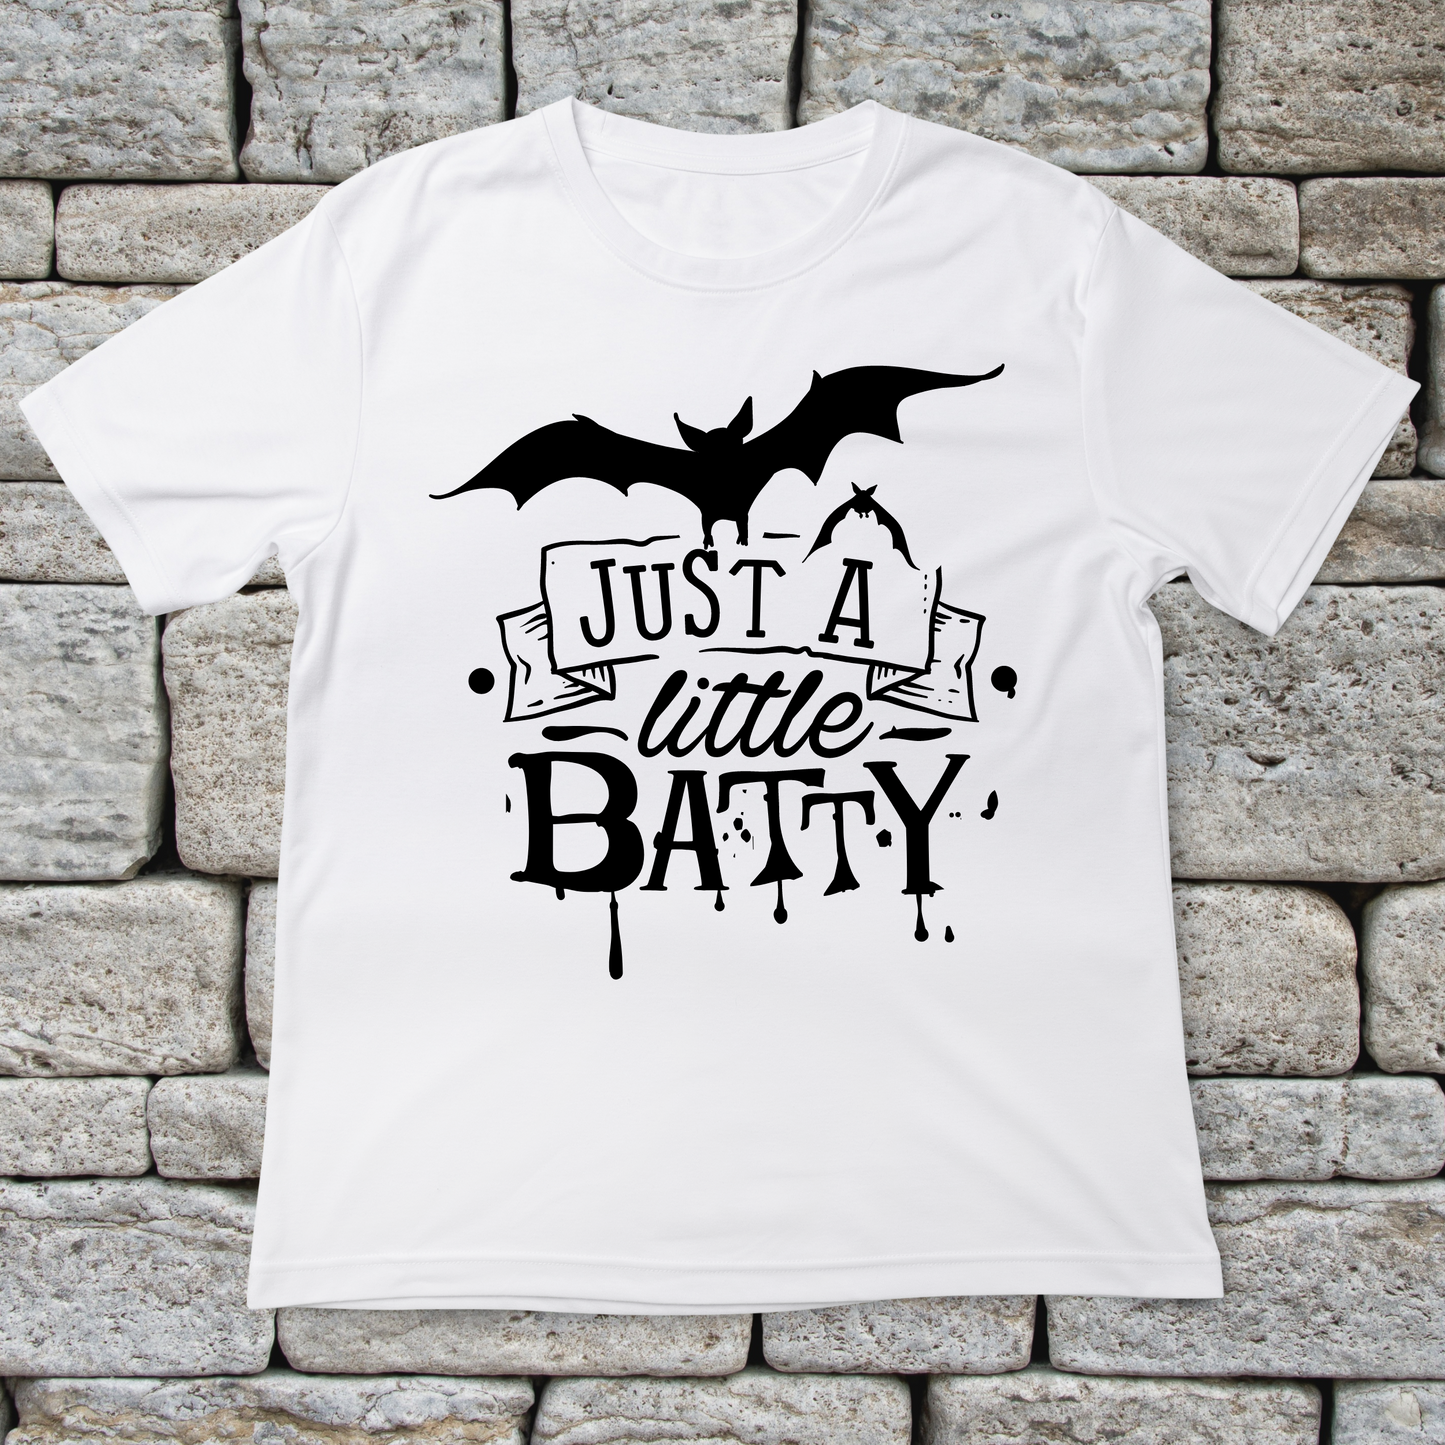 Just a little batty women funny halloween shirt - Premium t-shirt from Lees Krazy Teez - Just $21.95! Shop now at Lees Krazy Teez